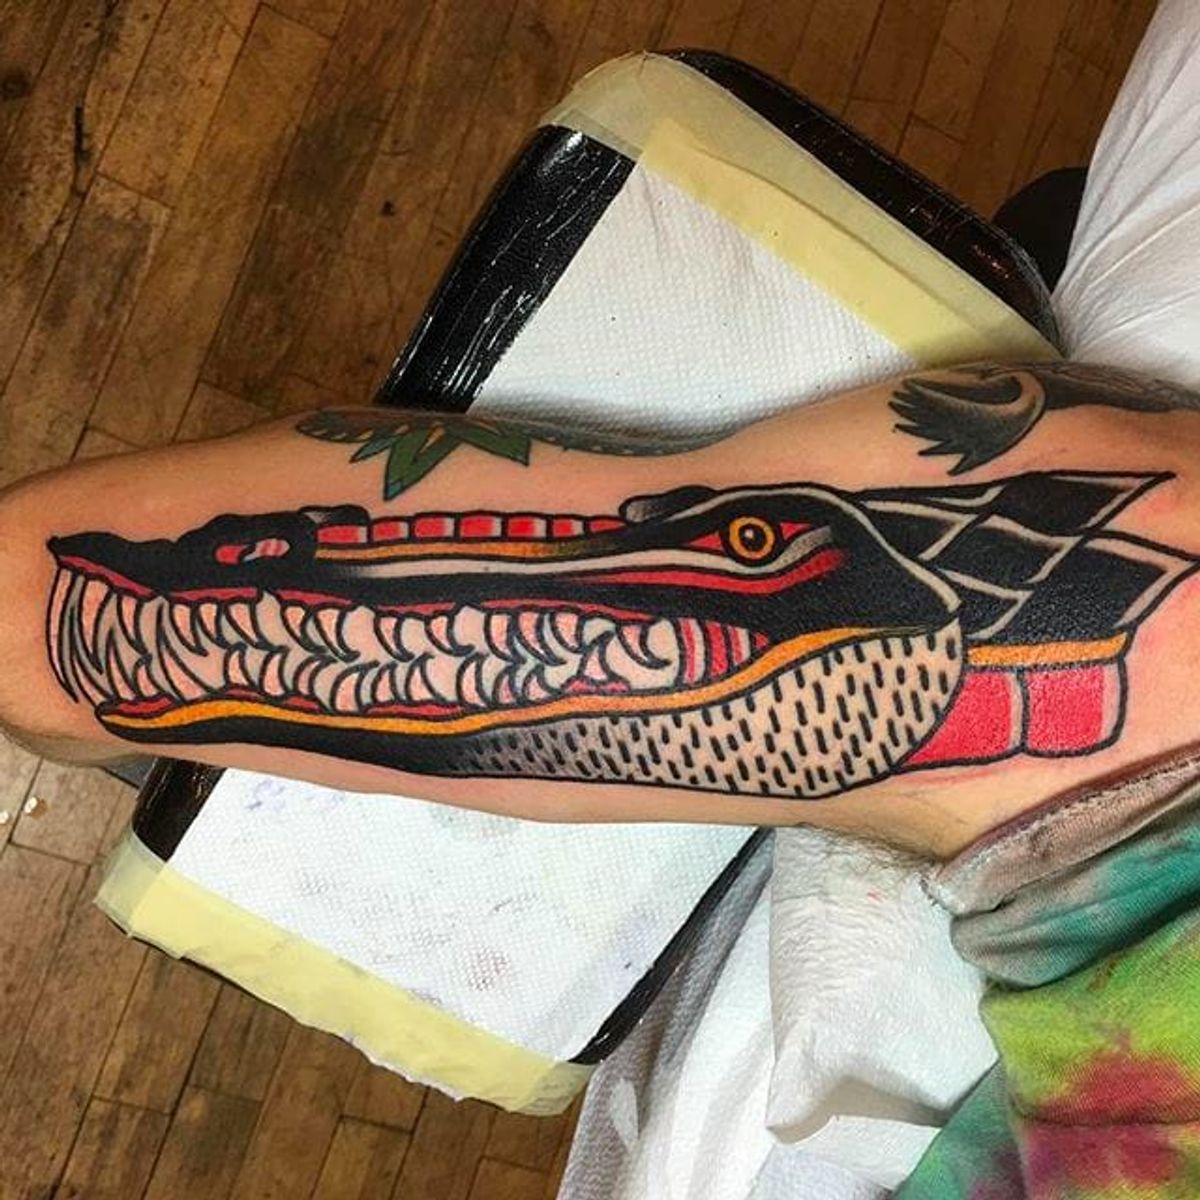 traditional alligator head tattoo